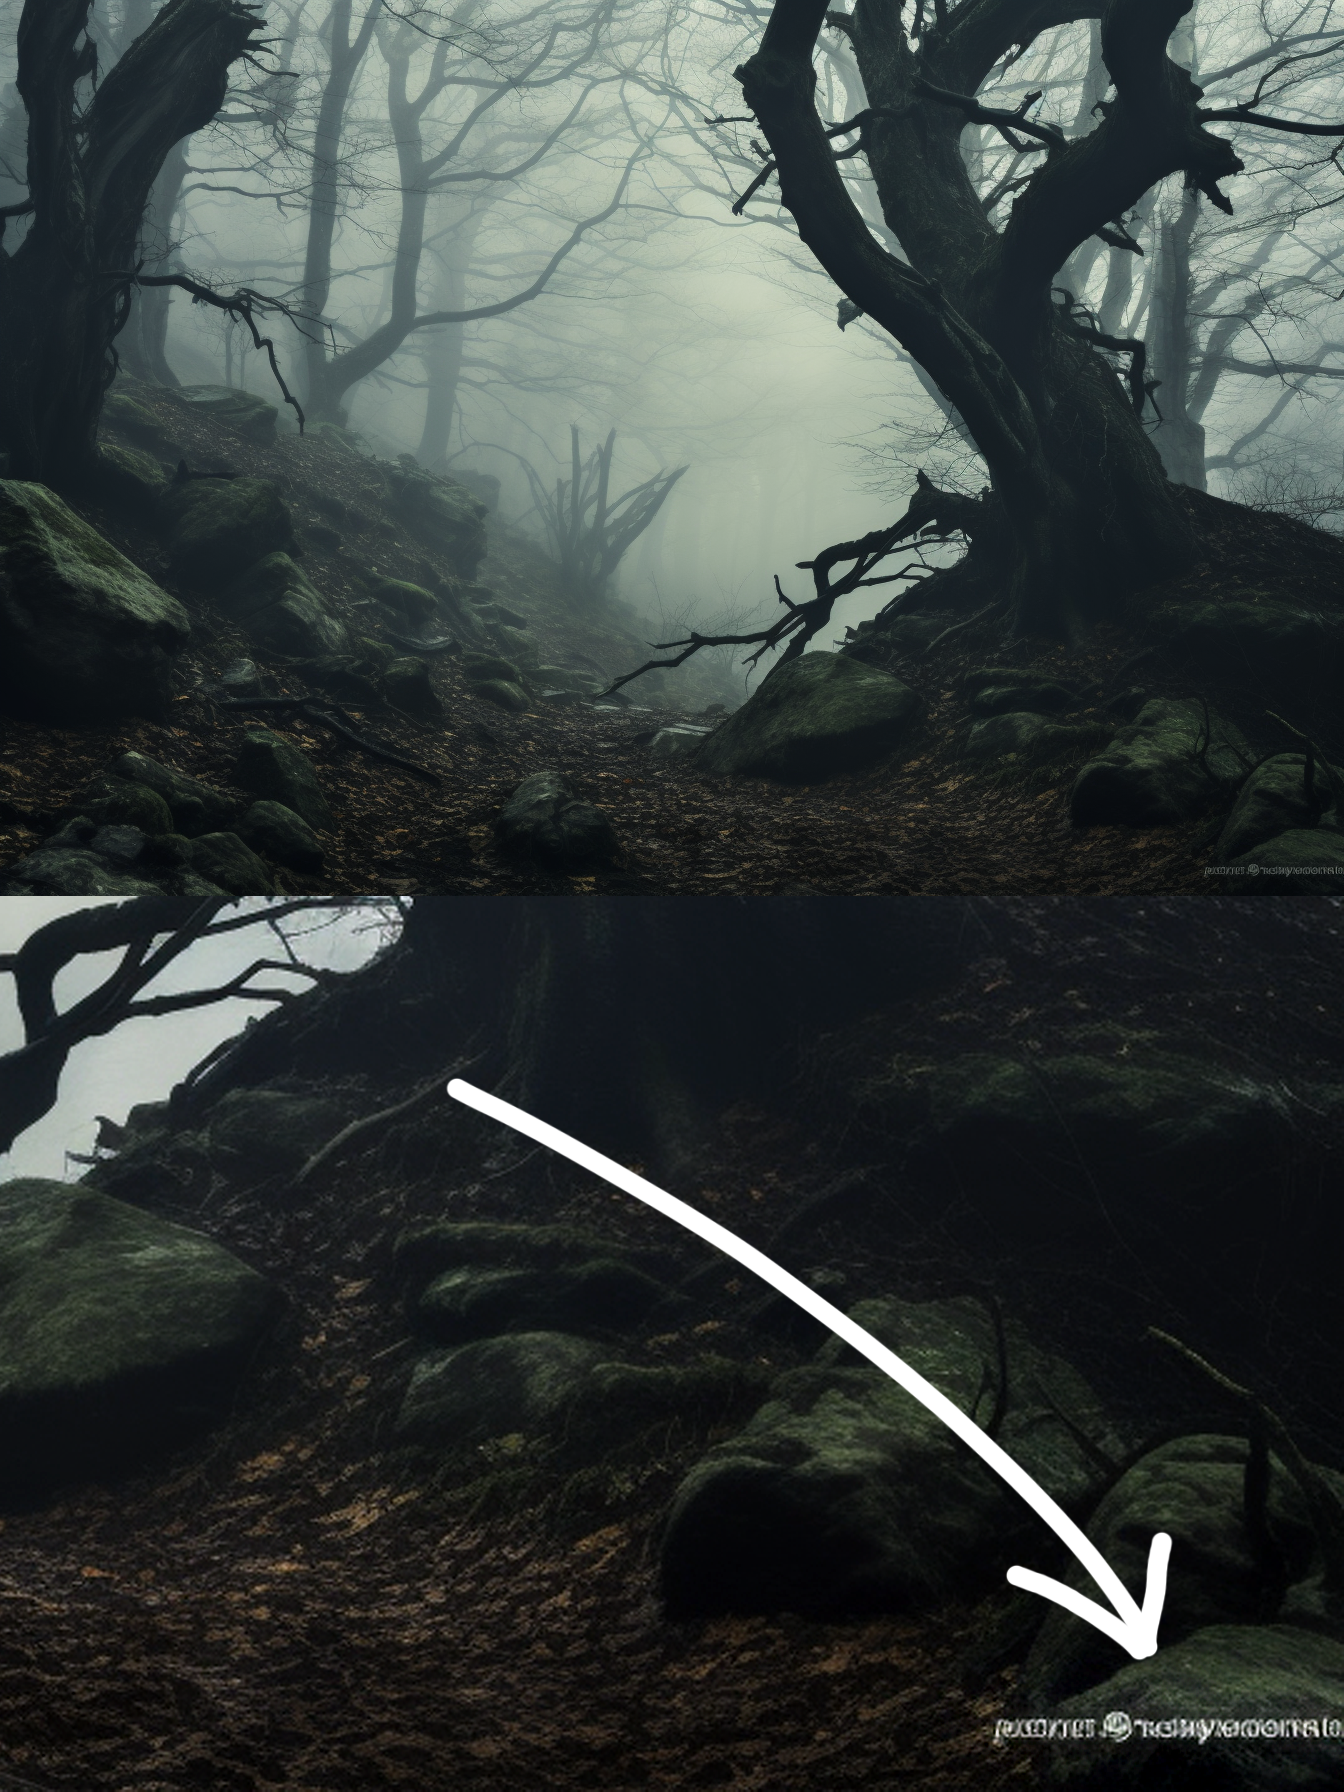 kilian foggy forest in the style of Kilian Schoenberger a lot o ee11b281 91b1 447d b65a a9c8e04de993s